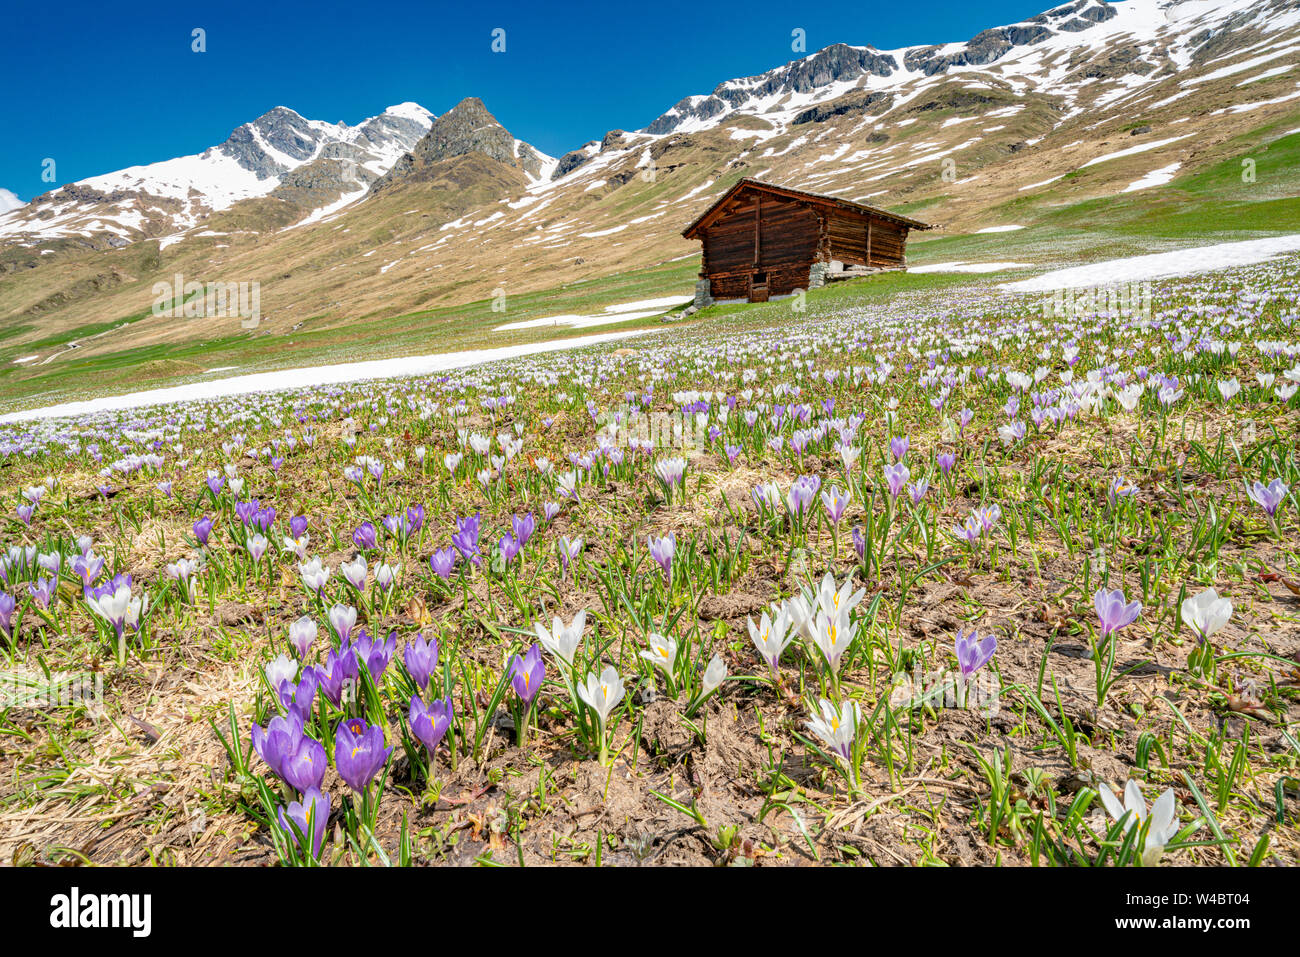 Flowering Crocus, Juf, Avers, Viamala Region, canton of Graubunden, Switzerland Stock Photo